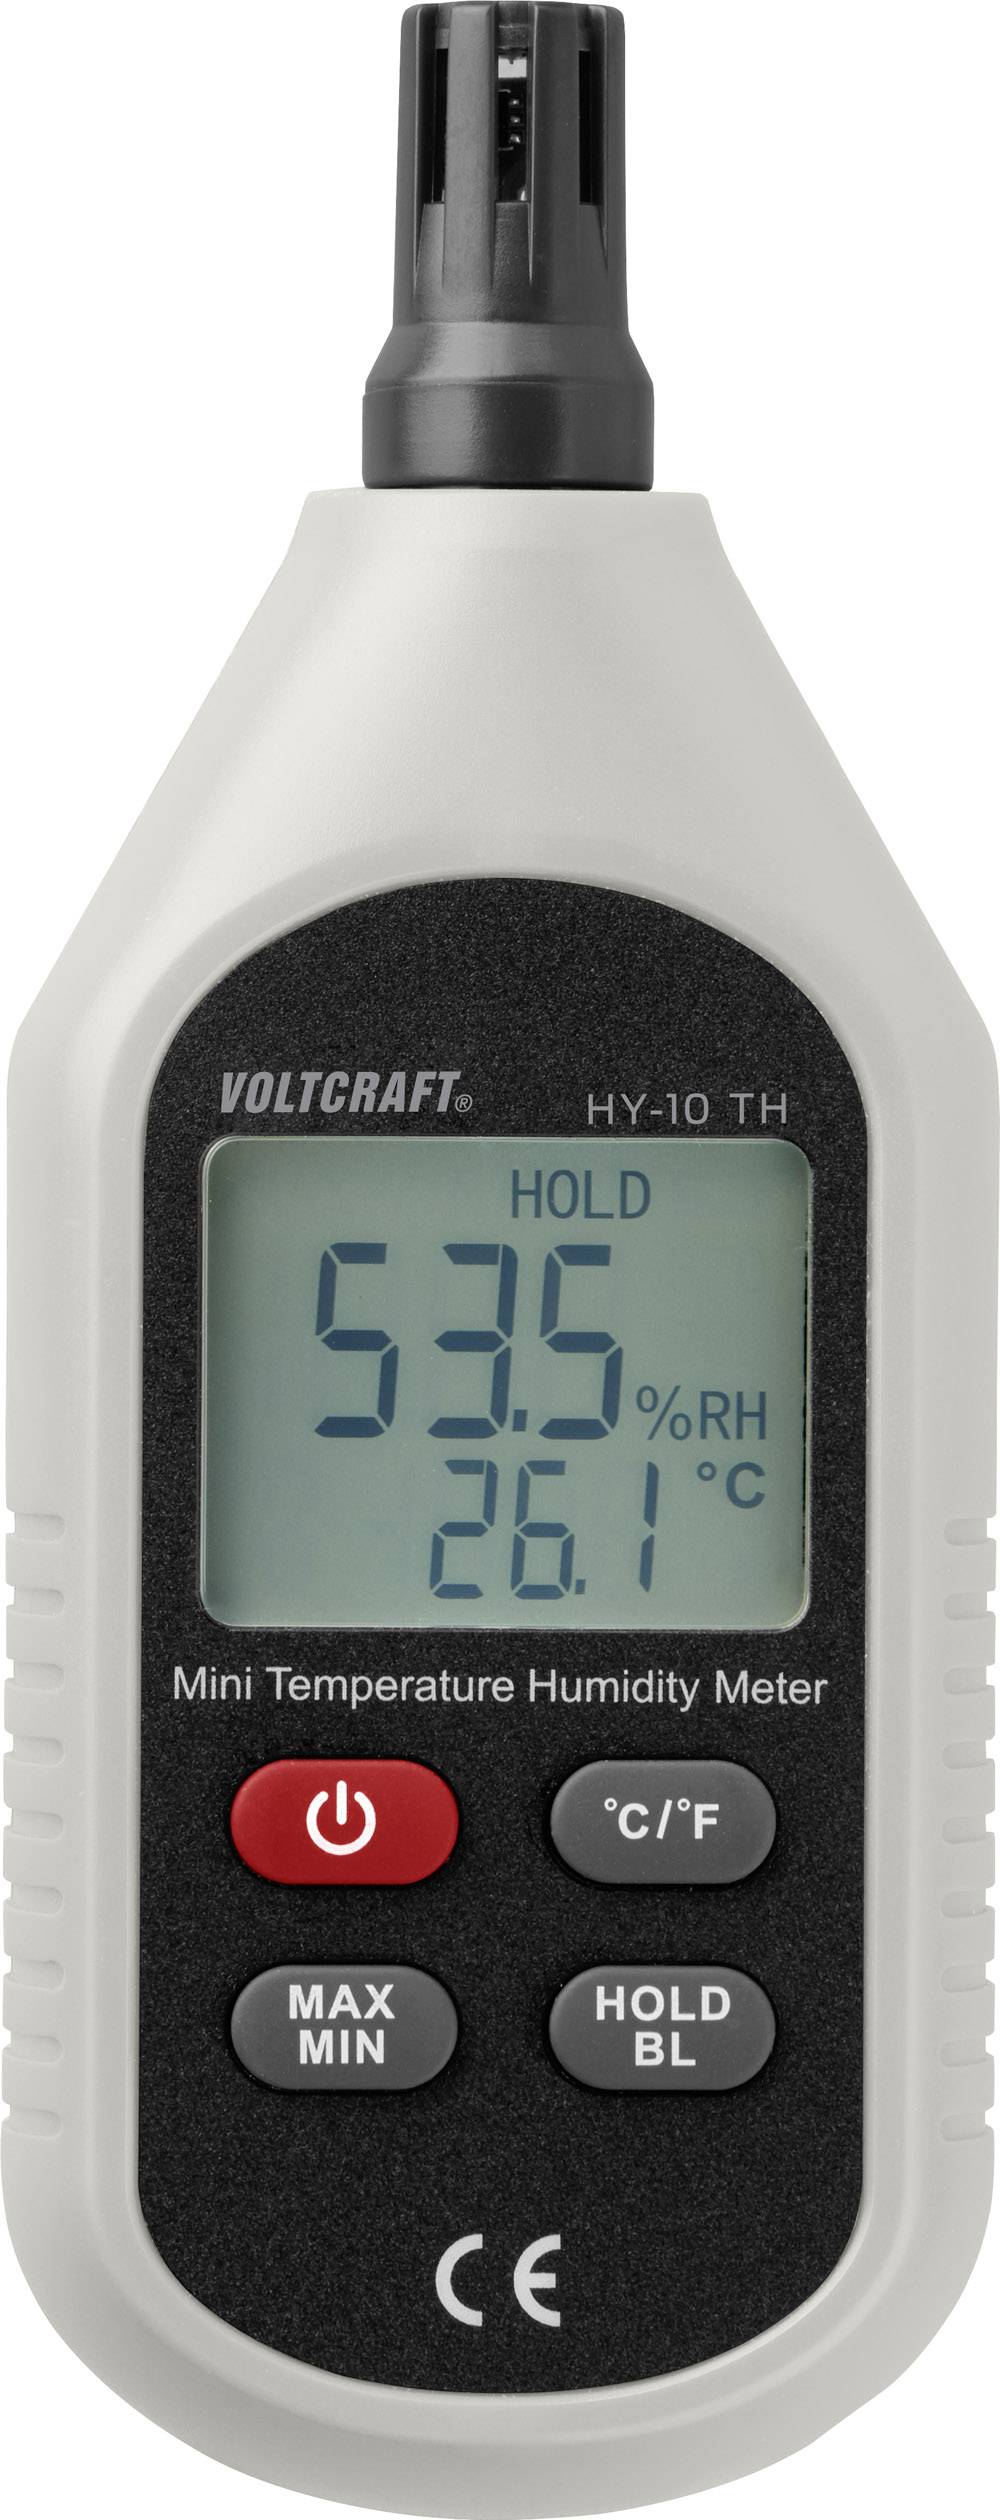 VOLTCRAFT HY-10 TH Hygrometer 0 RH 100 RH | Conrad.com